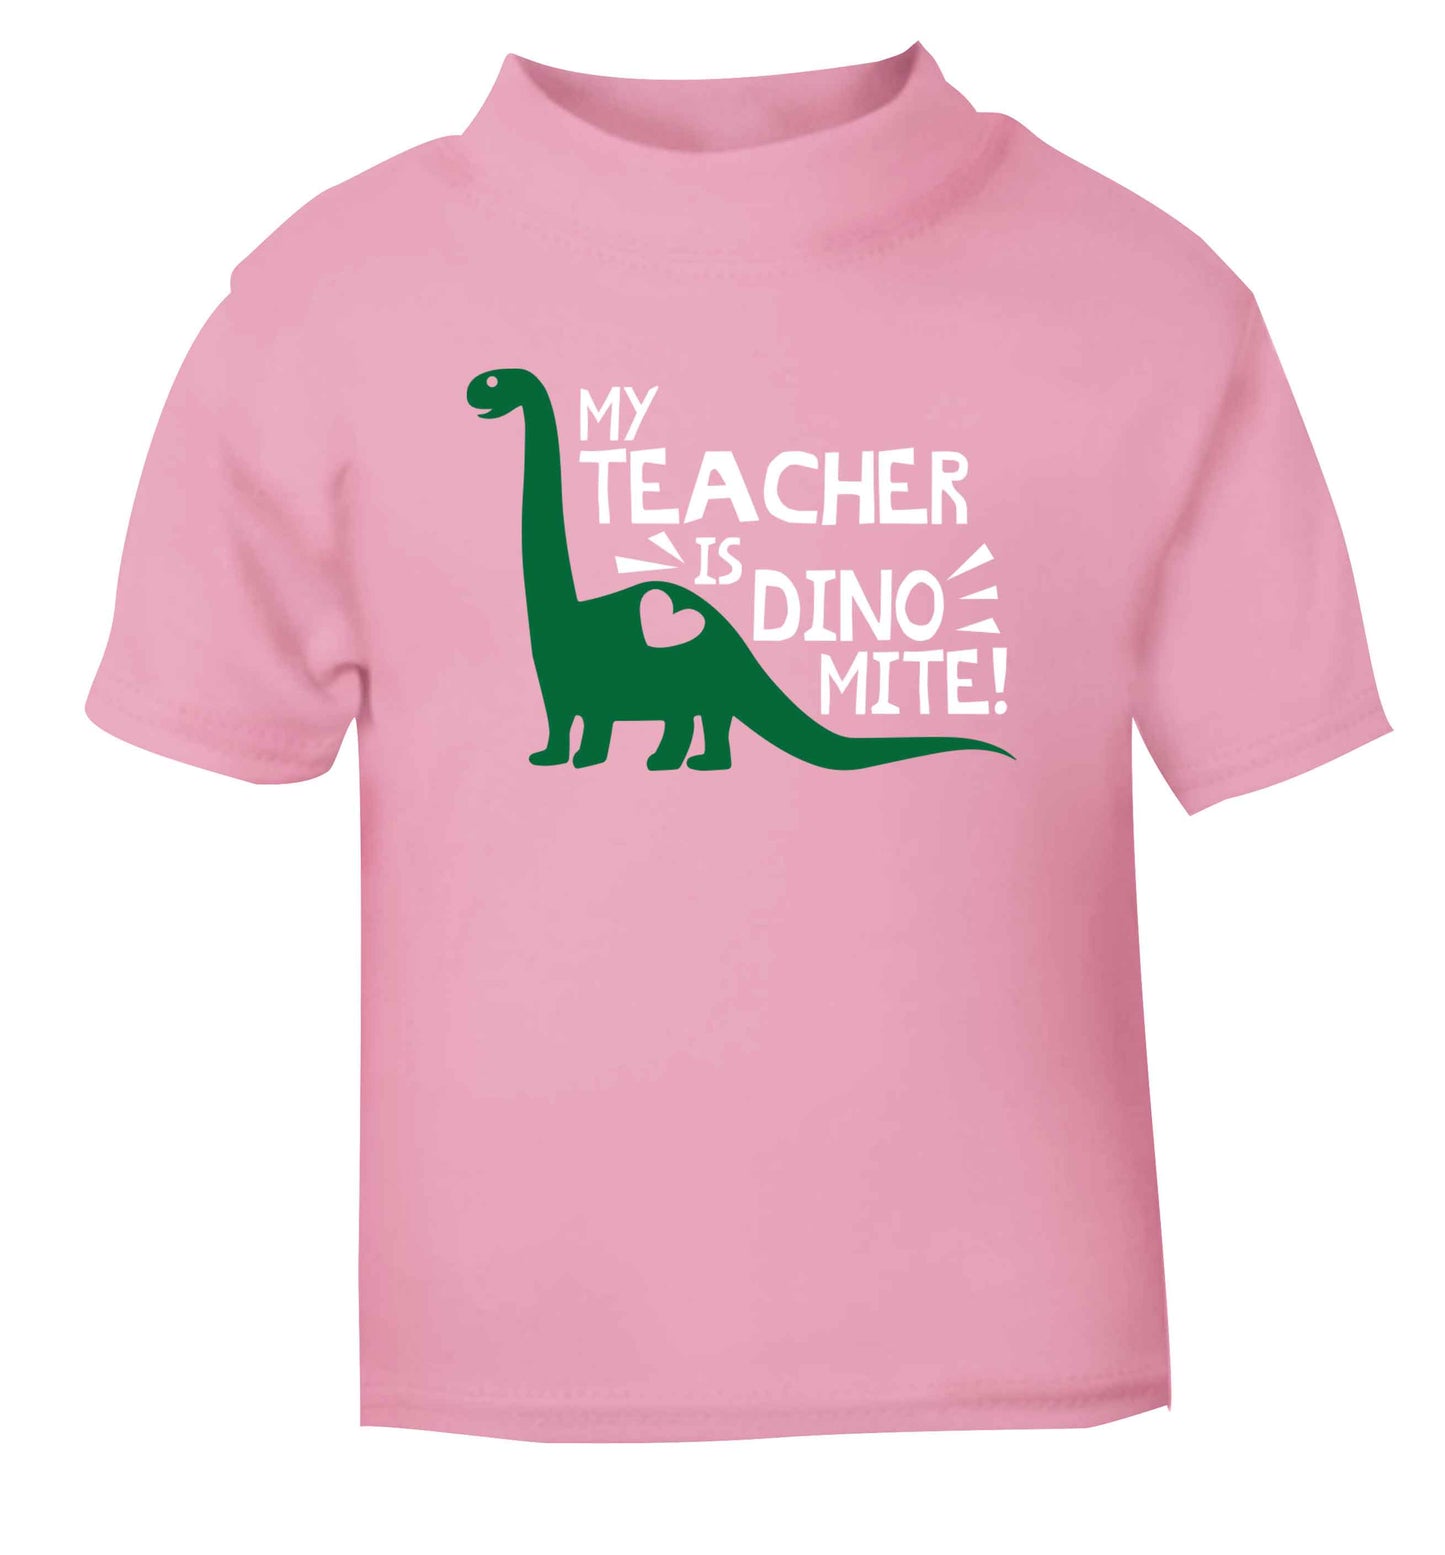 My teacher is dinomite! light pink Baby Toddler Tshirt 2 Years